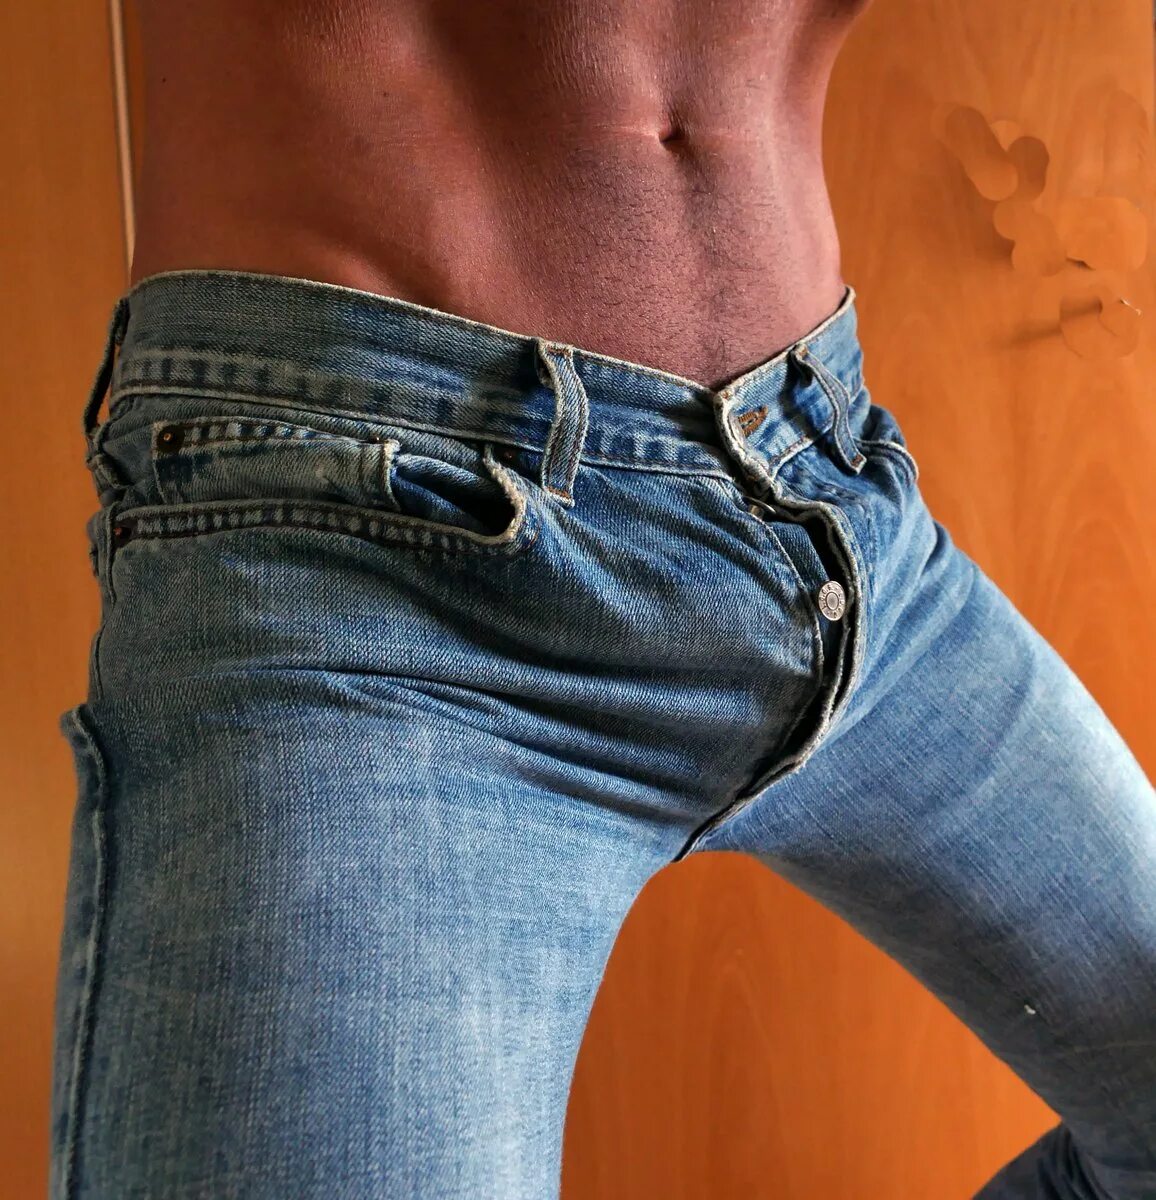 Levis 501 bulge. Bulge джинсы. Men bulge джинсы. Denim bulges в джинсах.